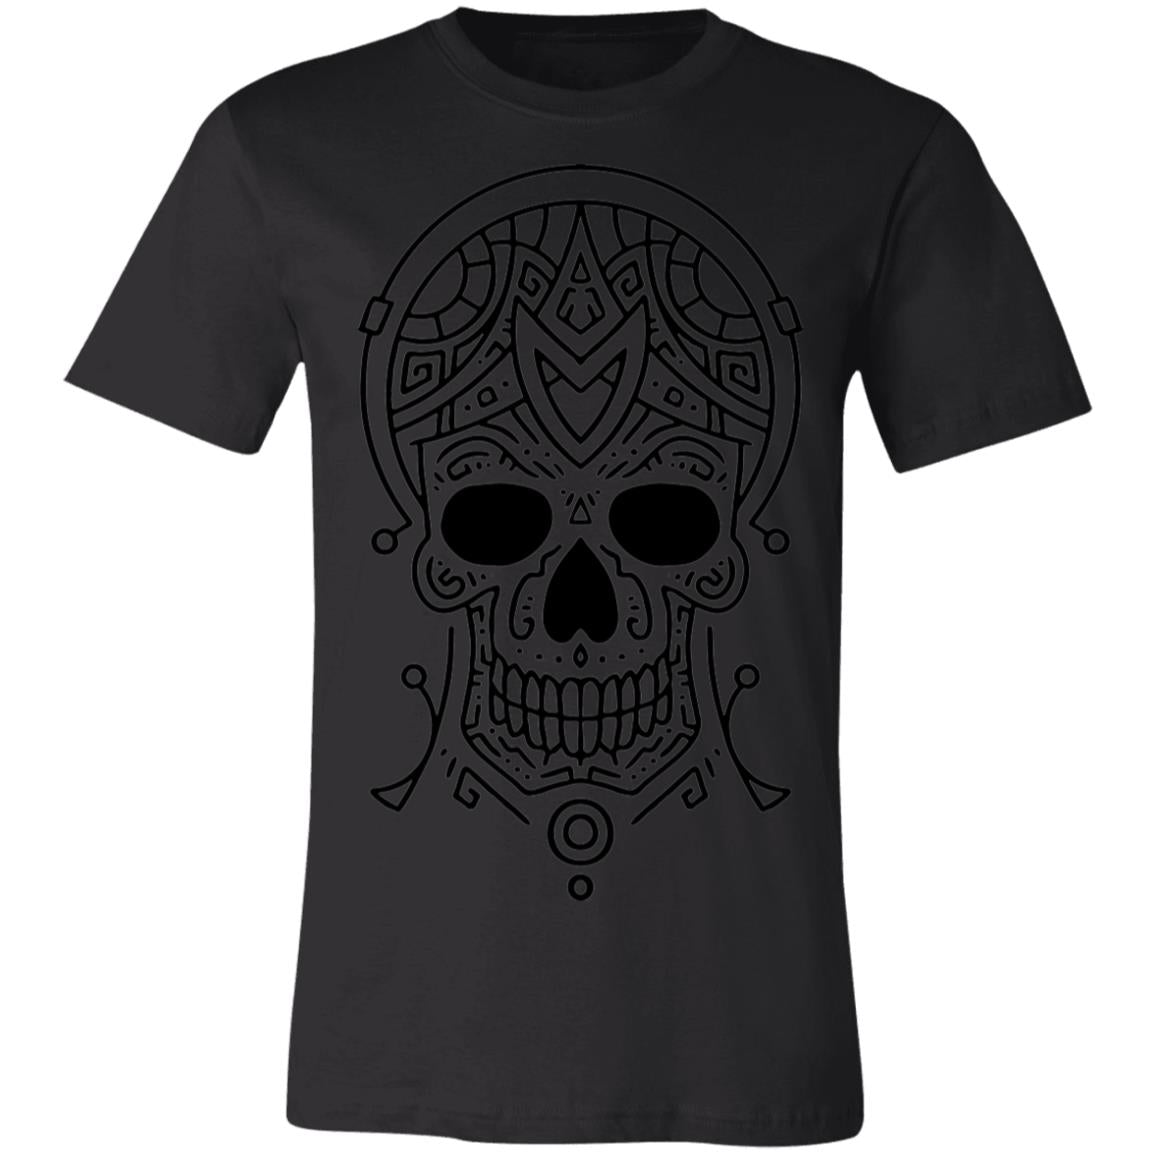 Skull 86 Santa Muerte Shirt-Express Your Love Gifts